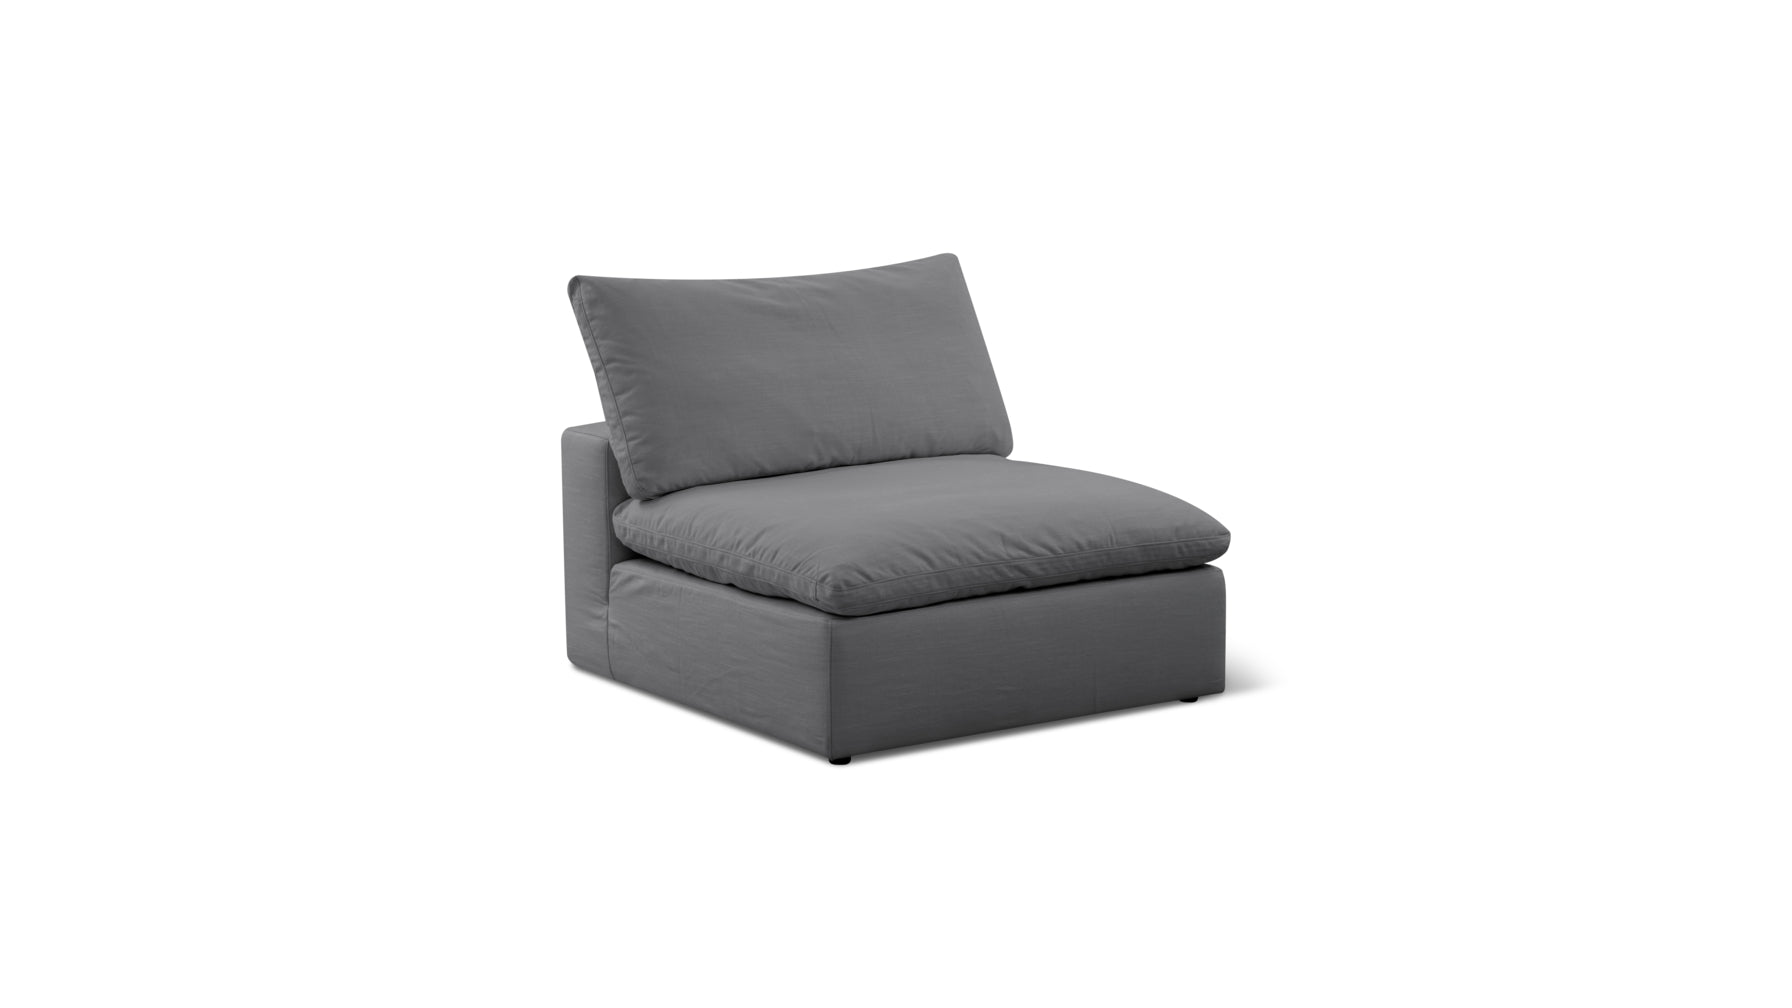 Movie Night™ Armless Chair, Standard, Gentle Rain - Image 6